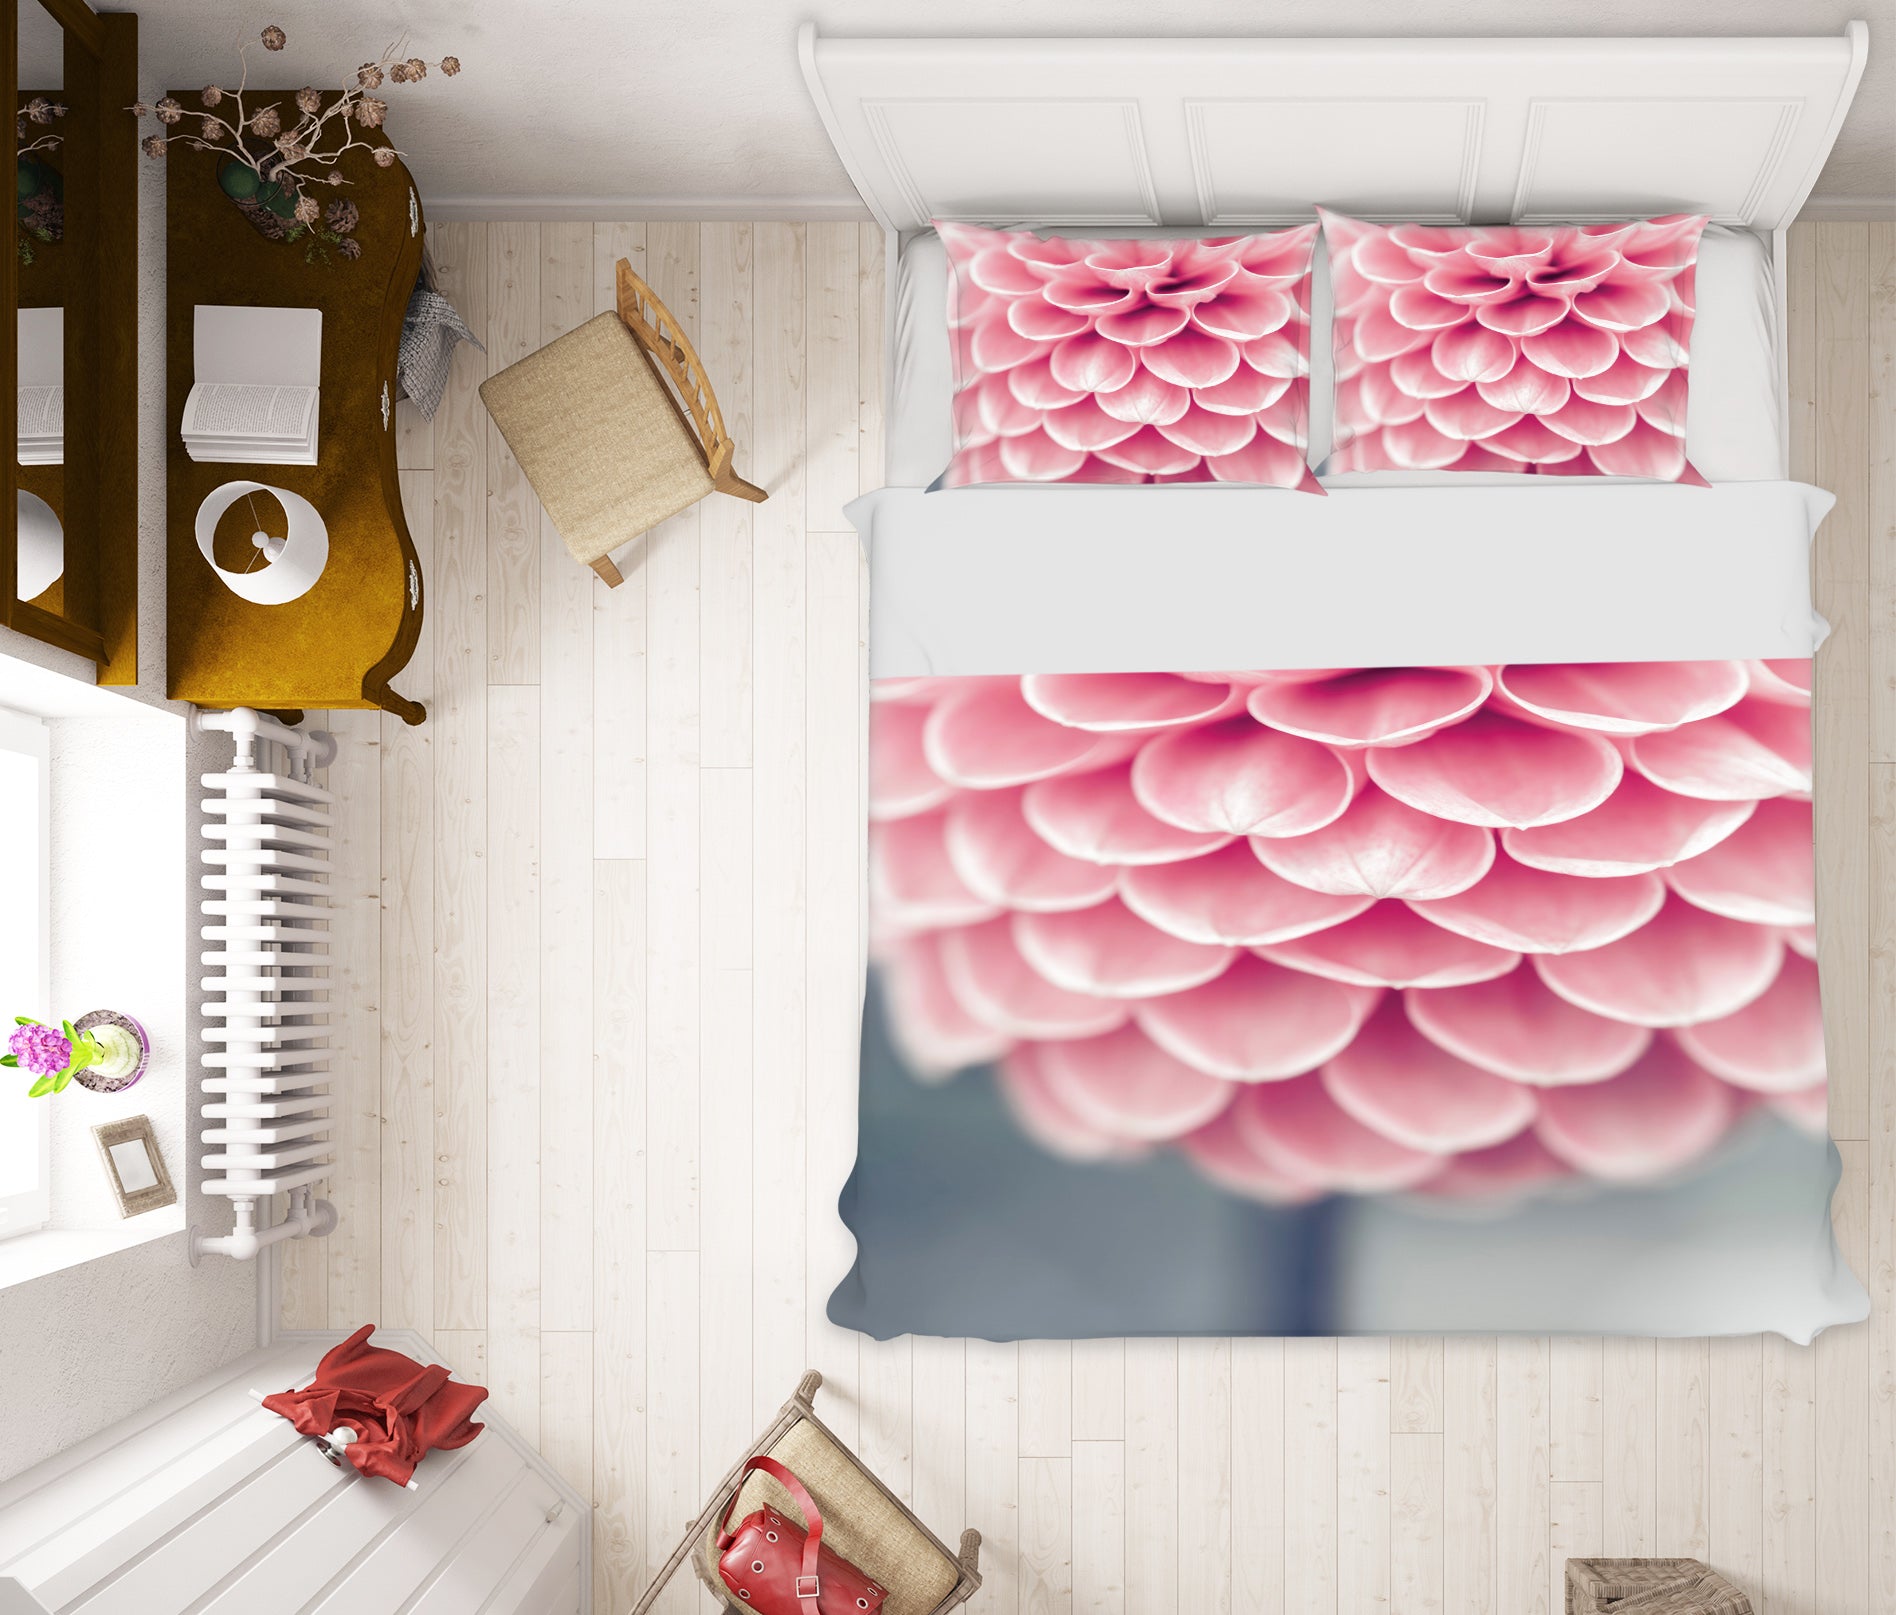 3D Petal Art 7132 Assaf Frank Bedding Bed Pillowcases Quilt Cover Duvet Cover